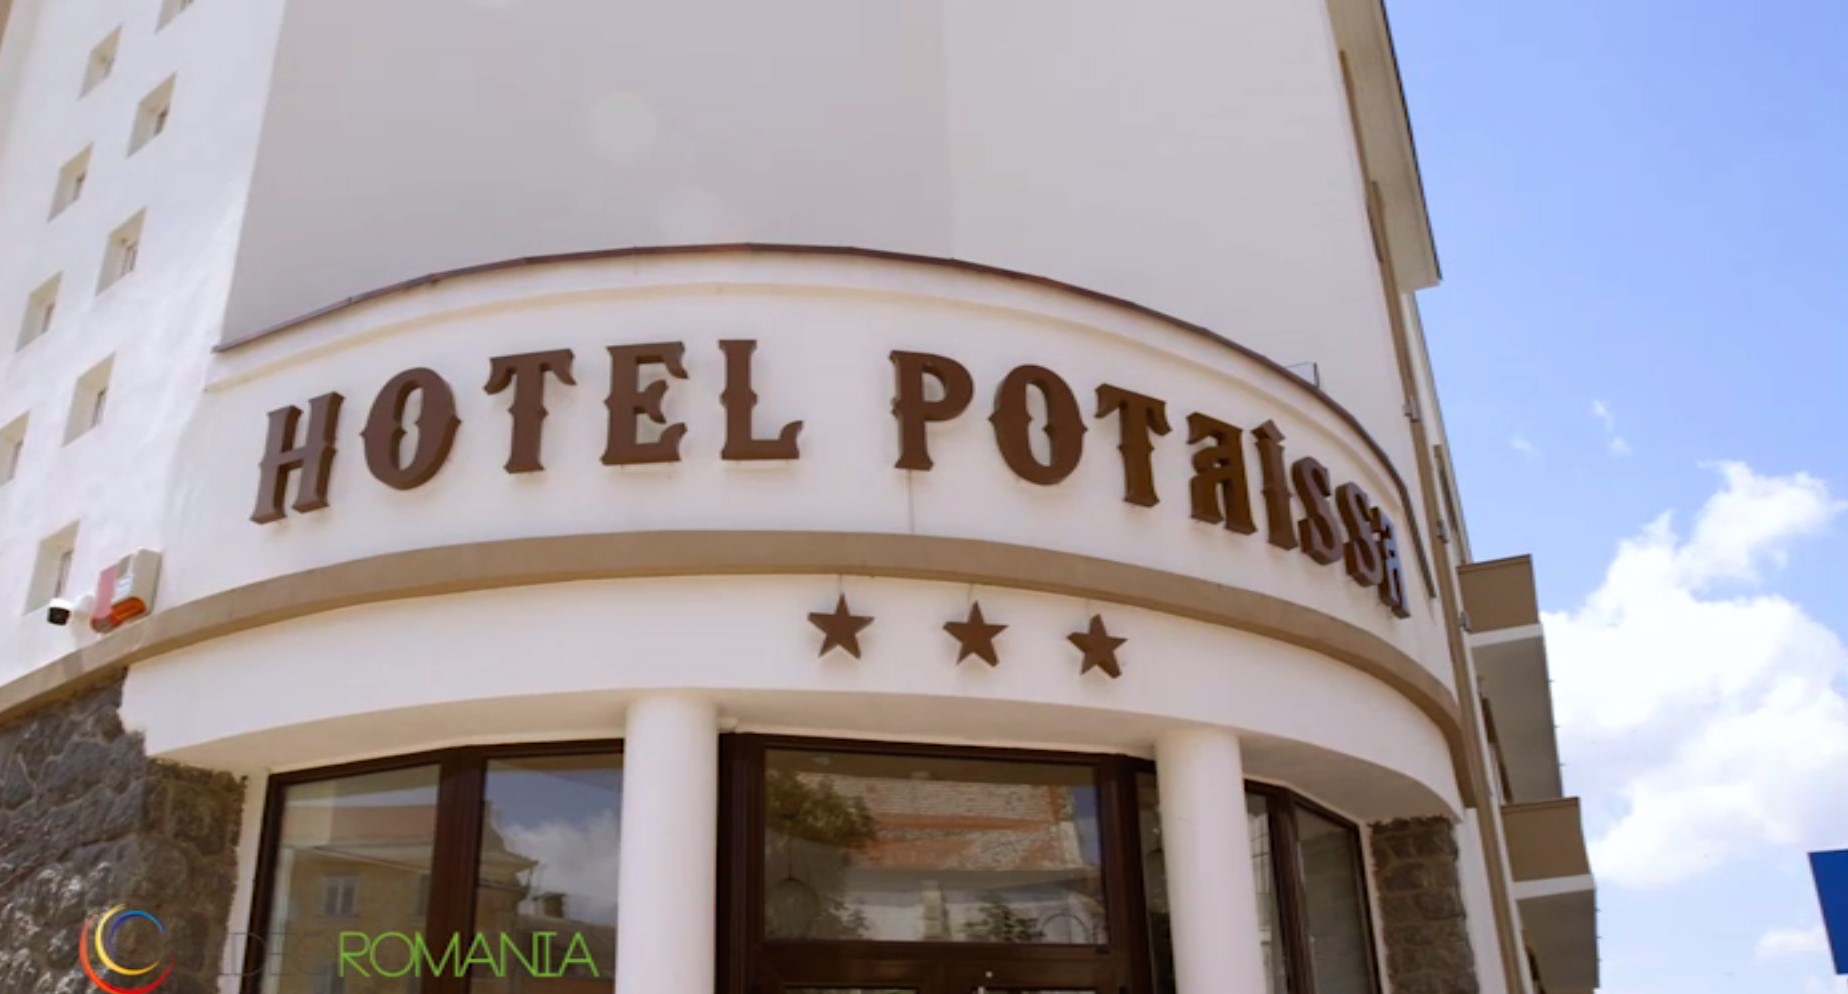 POTAISSA Hotel Turda Cluj